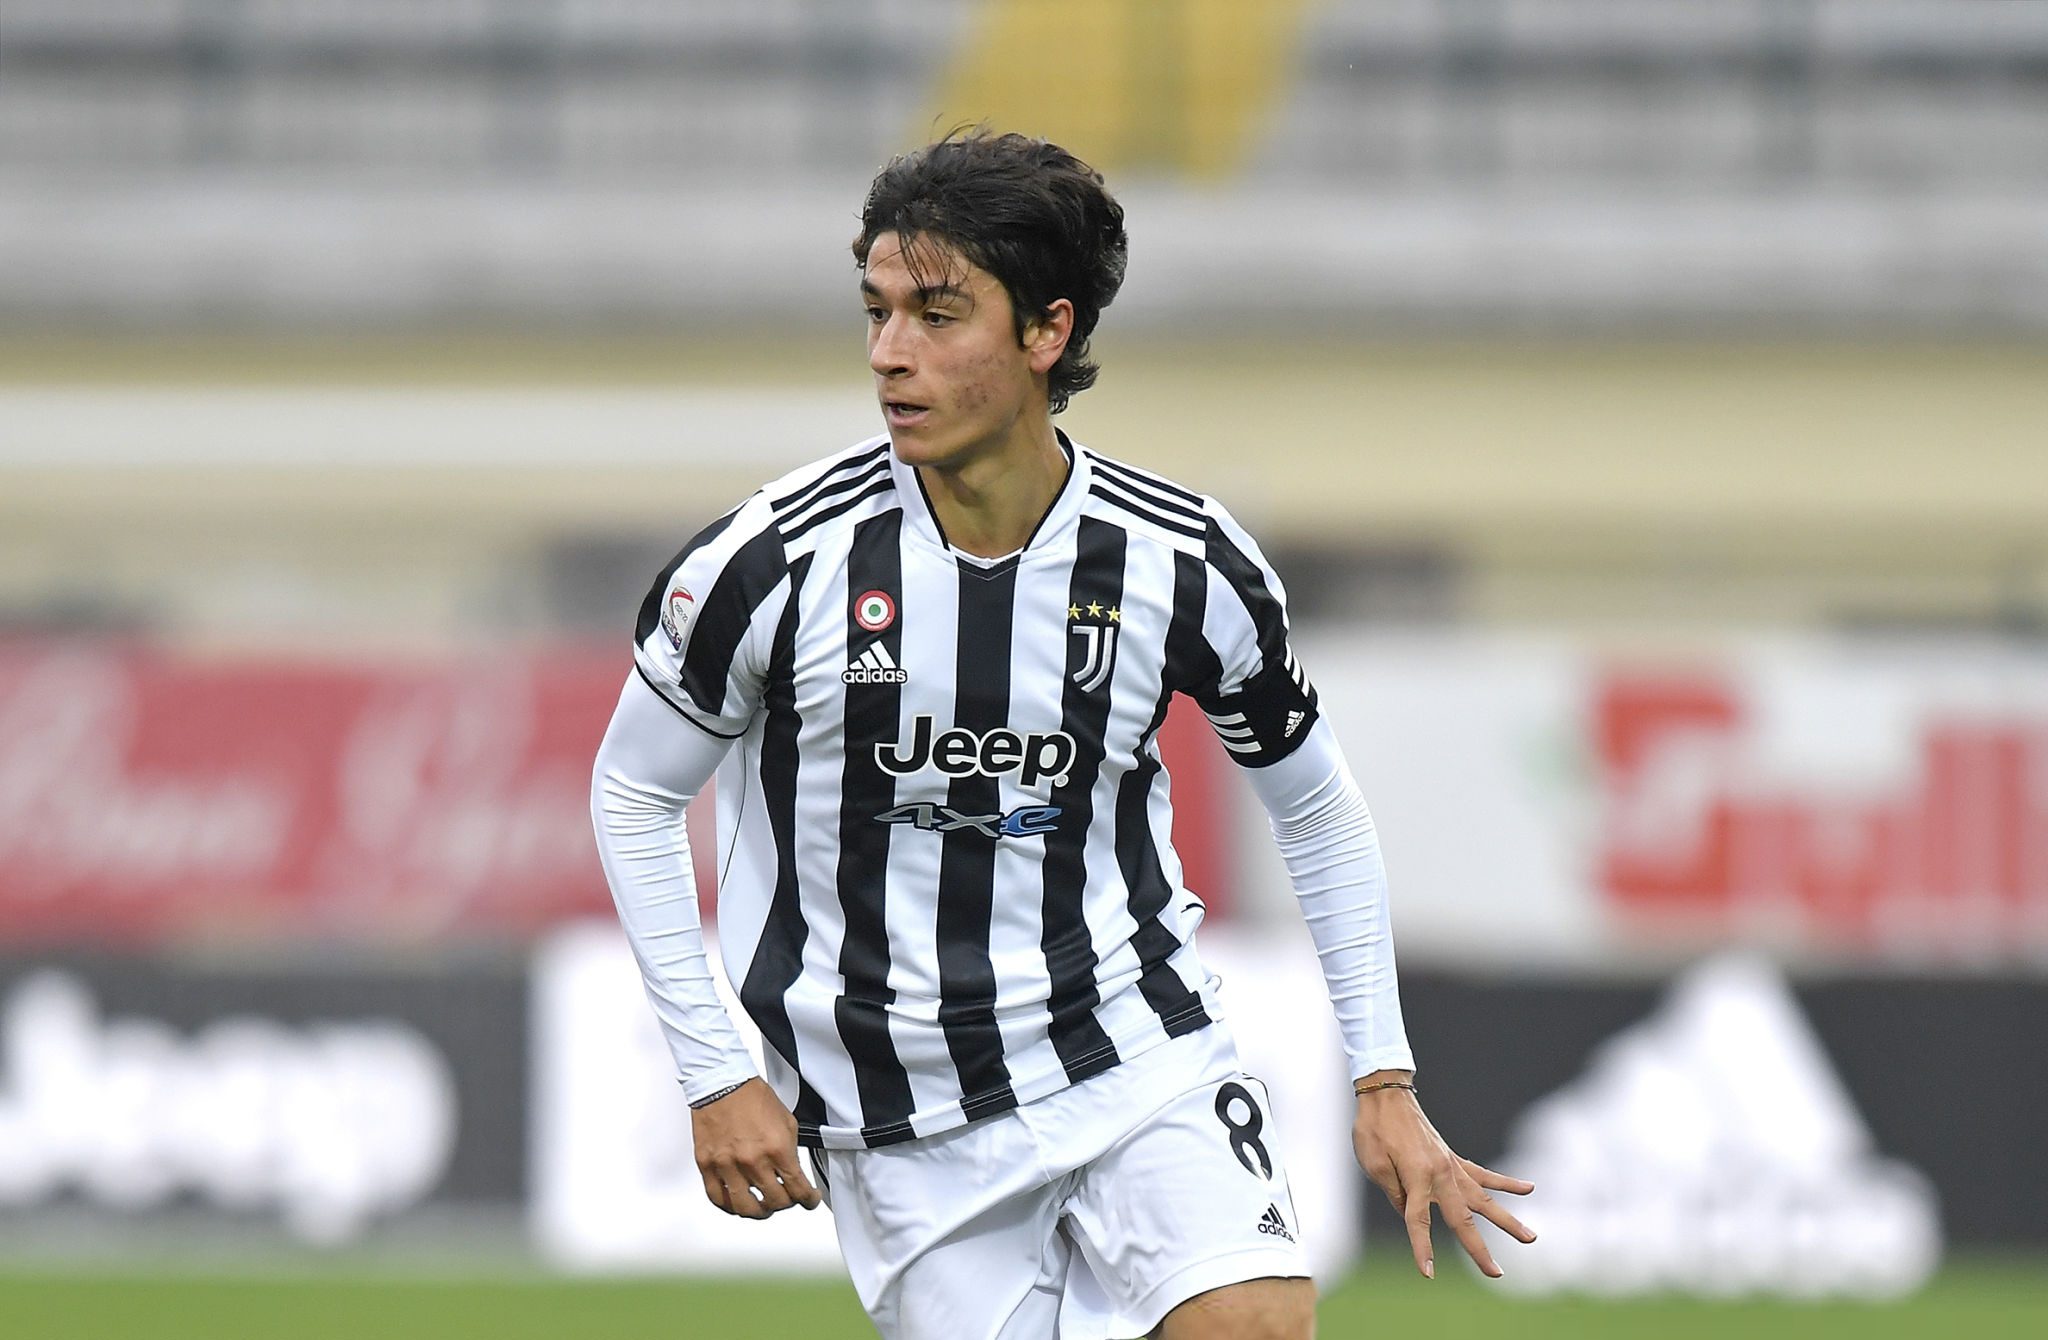 Giuseppe Leone Juventus